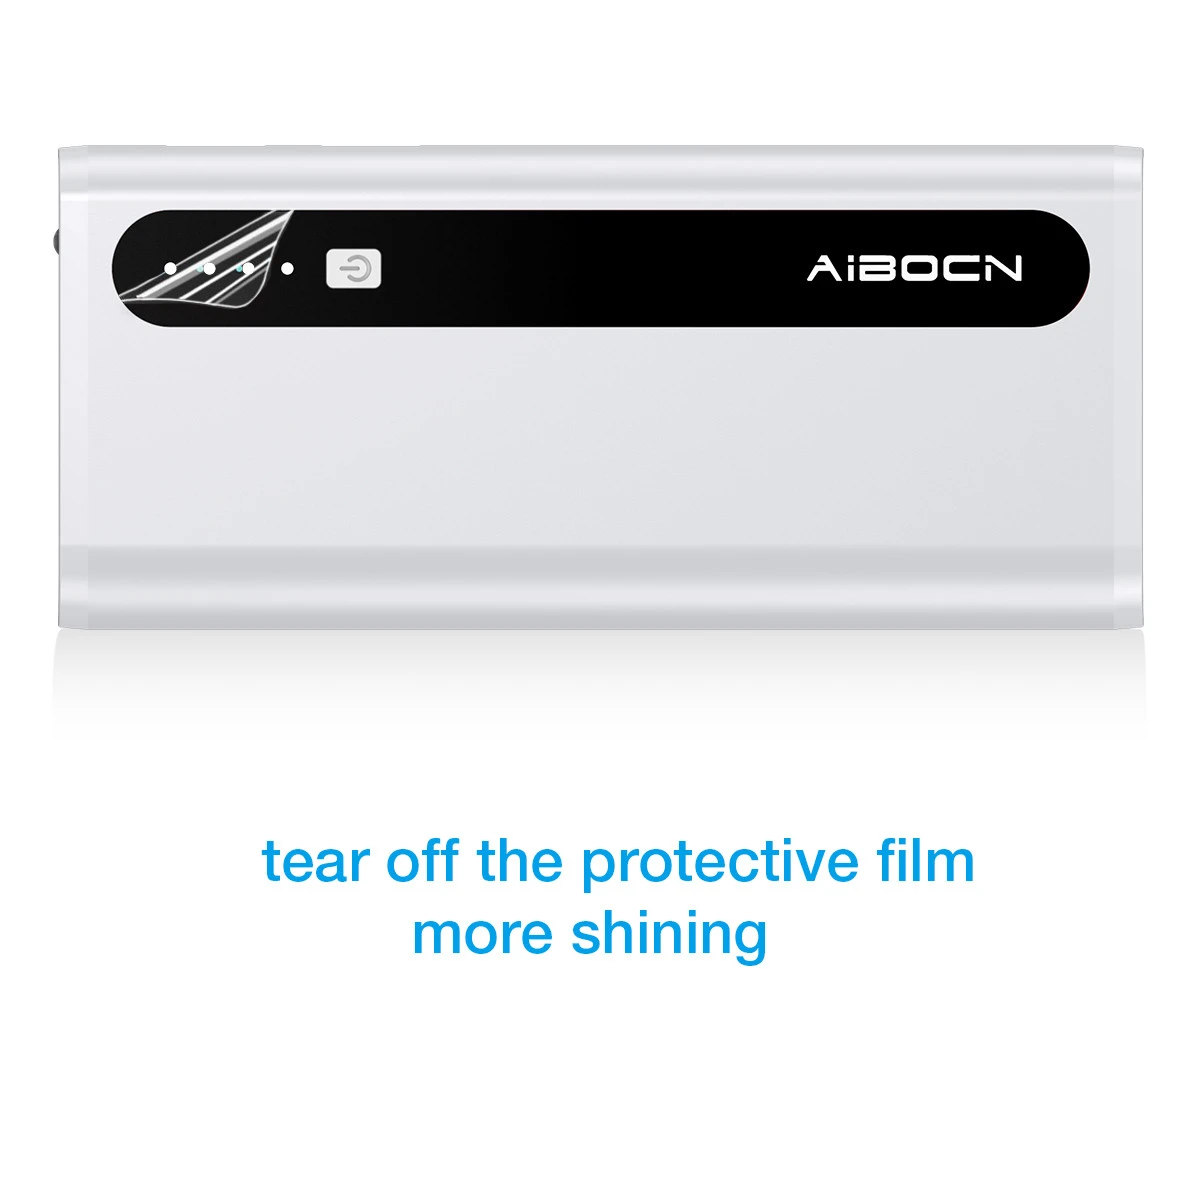 Aibocn dual USB ports high capacity 10000mAh portable power bank external battery charger with flashlight